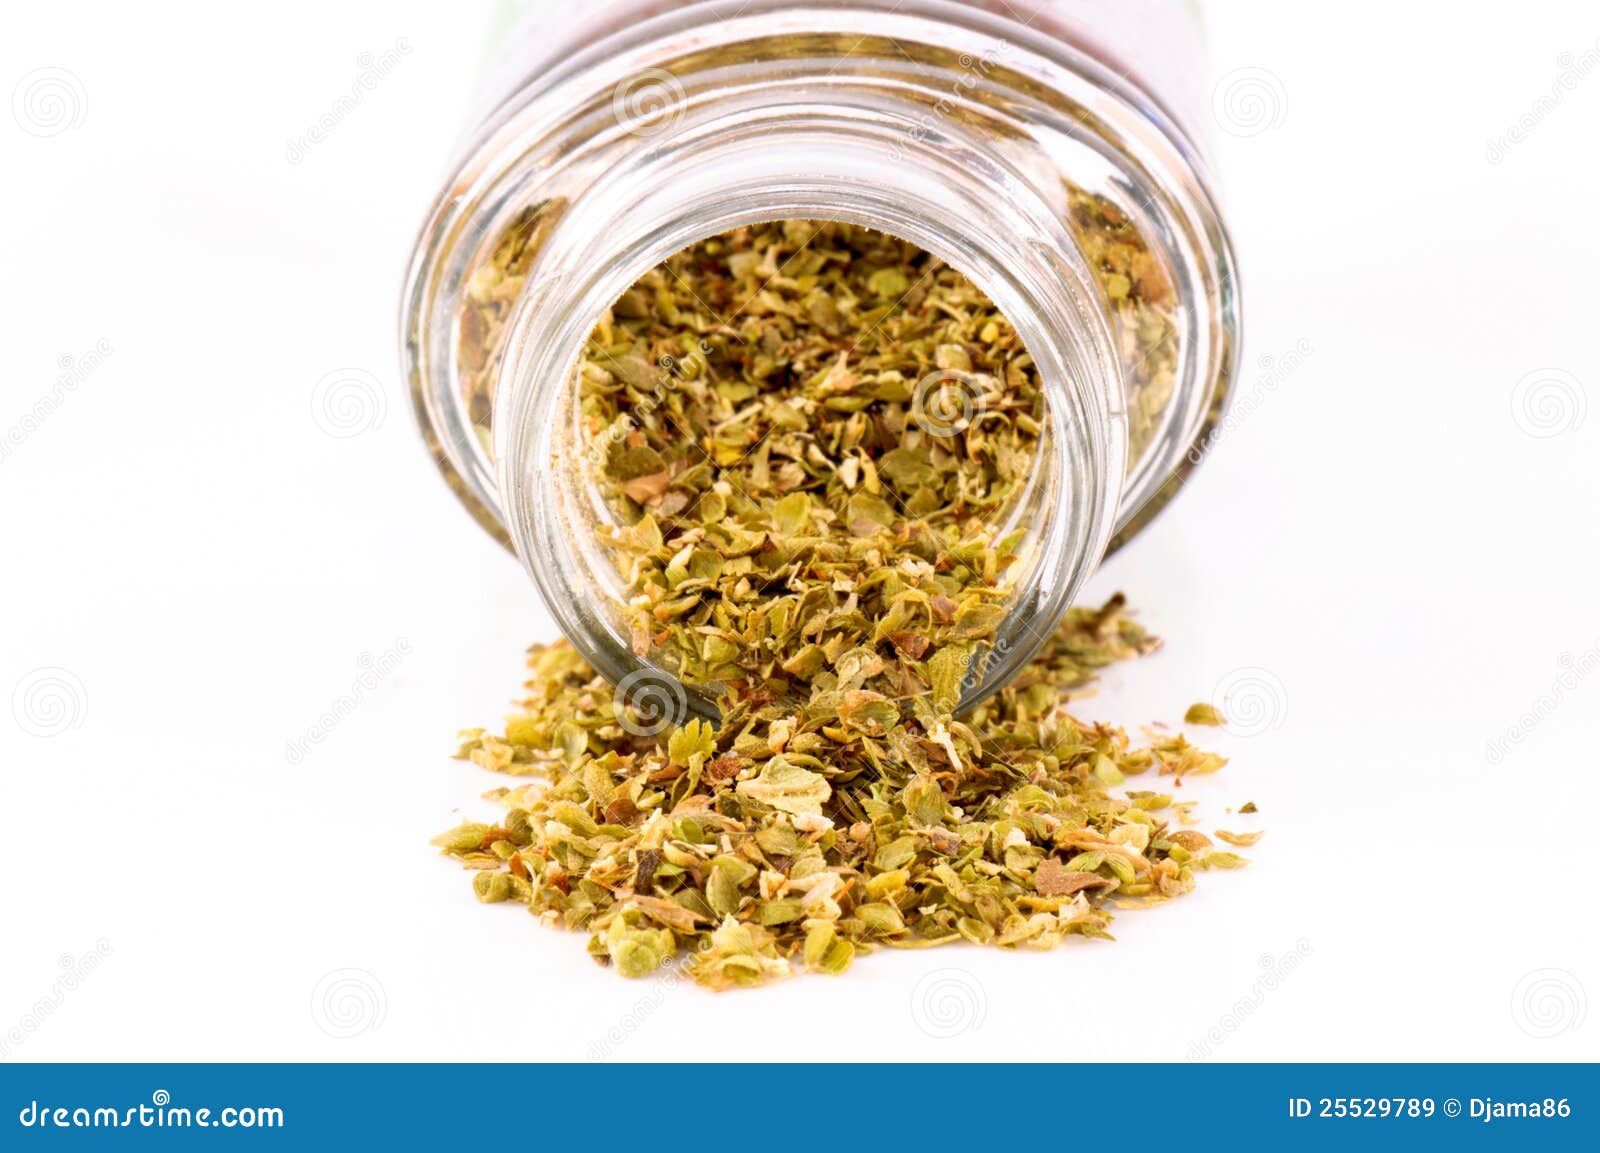 Dried oregano leaves stock image. Image of aromatic, fresh ...